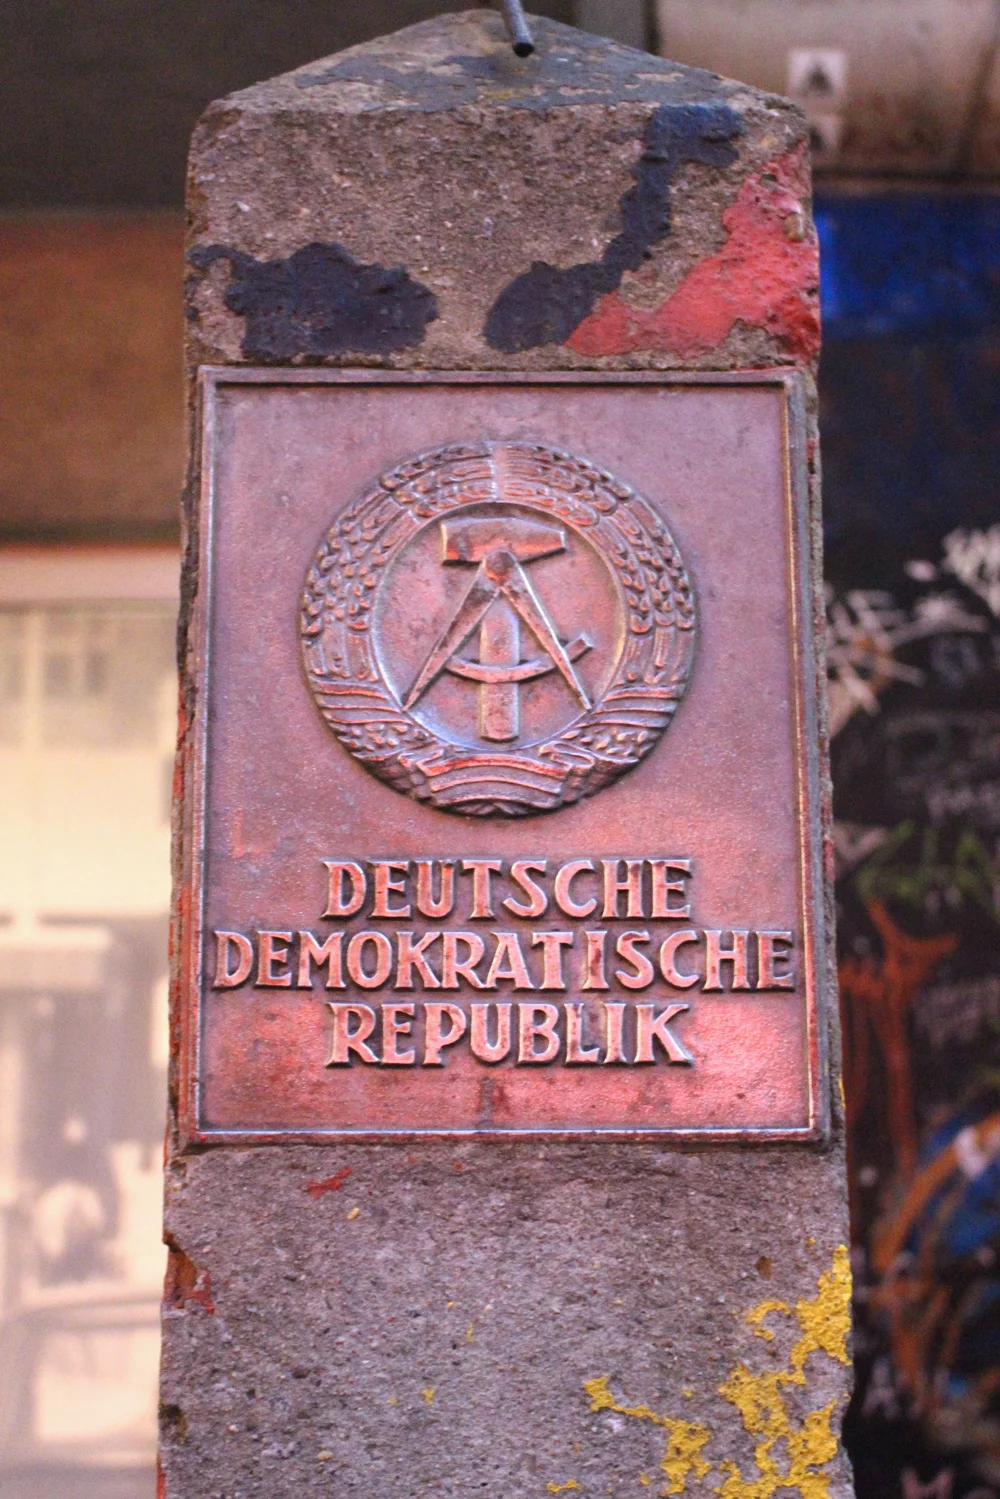 Deutsche Demokratische Republik sign in Berlin - travel & lifestyle blog